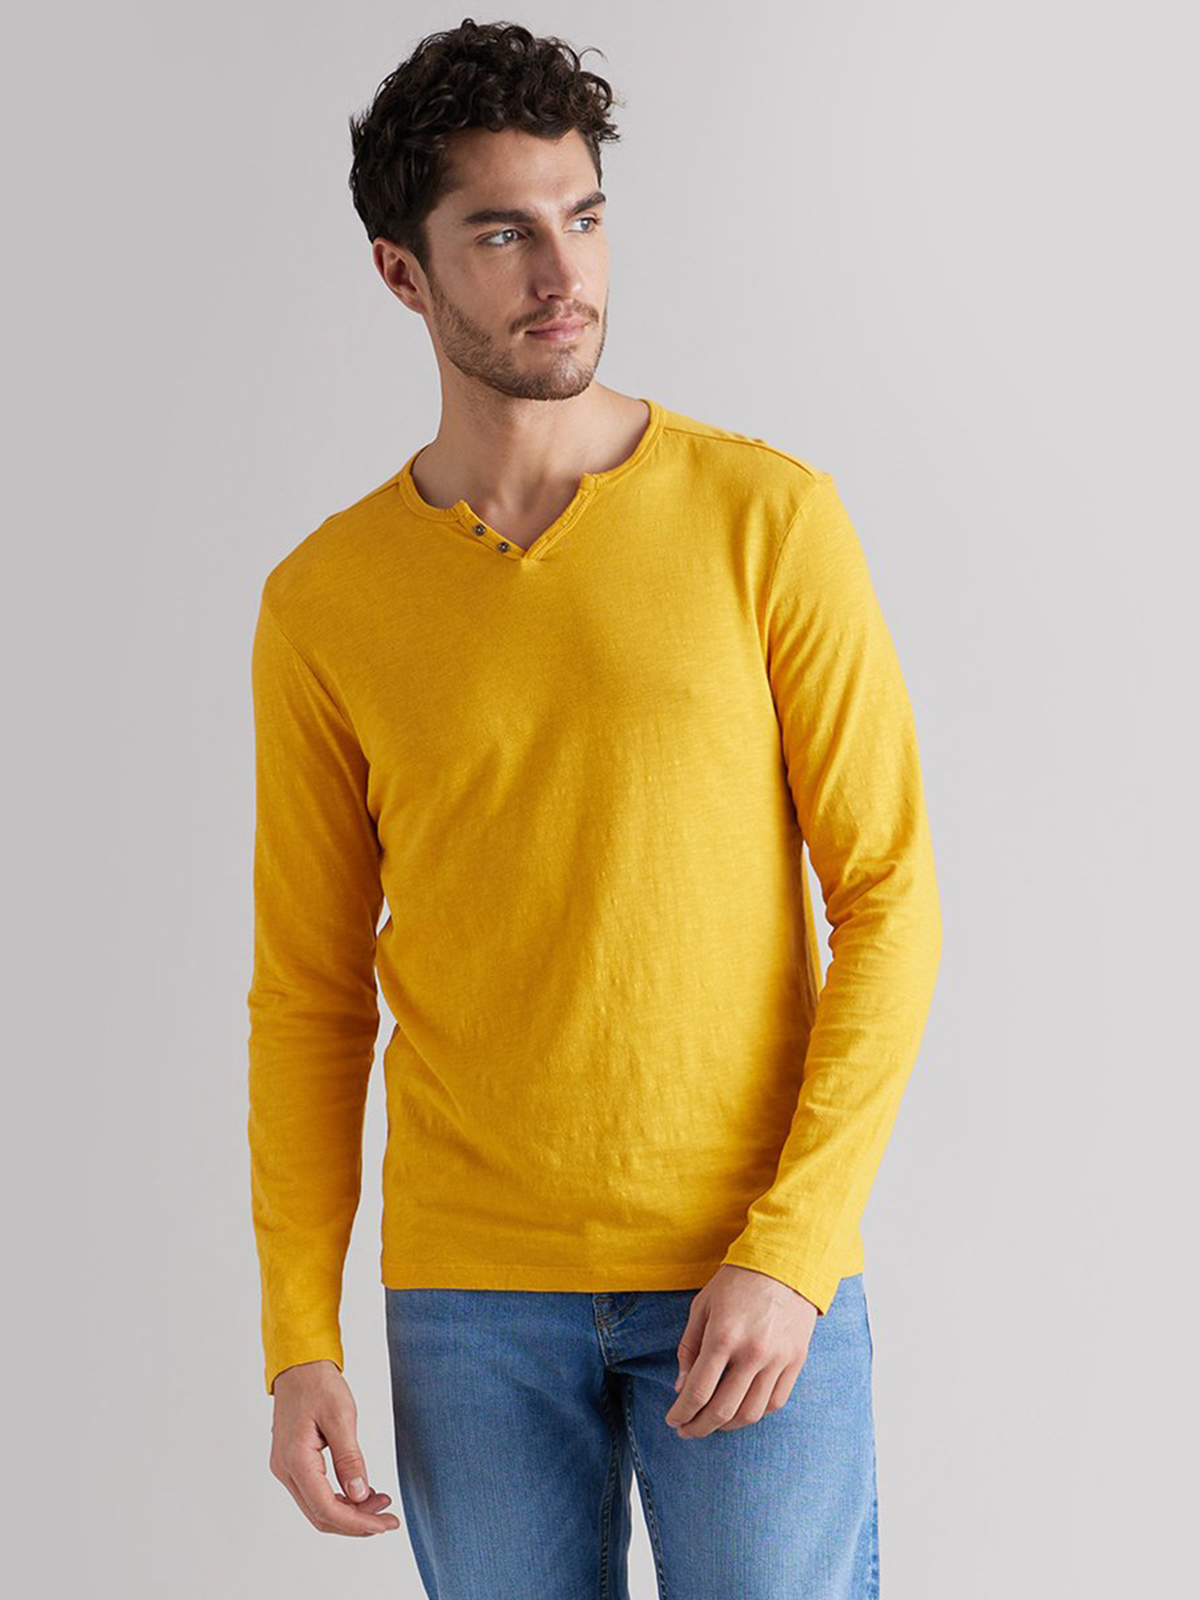 Celio cotton bright yellow full sleeves t shirt - G3-MTS15088 